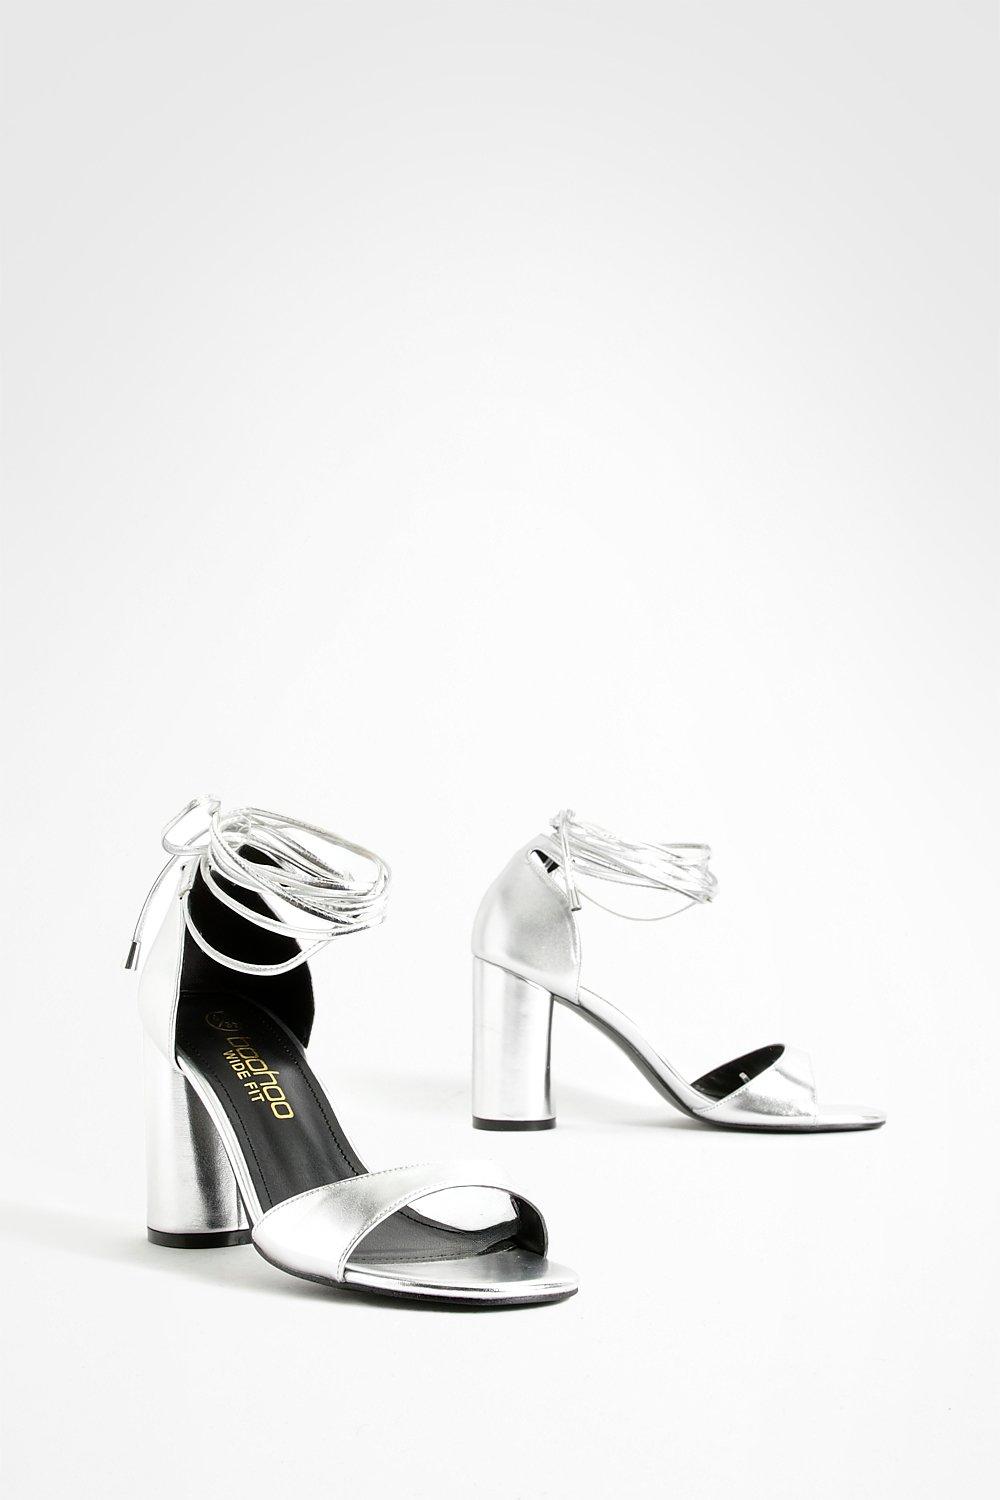 FIC Floral Women's Carla Size 11 Extra Wide Width Sandal Heels in Silver  (As Is Item) - Bed Bath & Beyond - 29483054